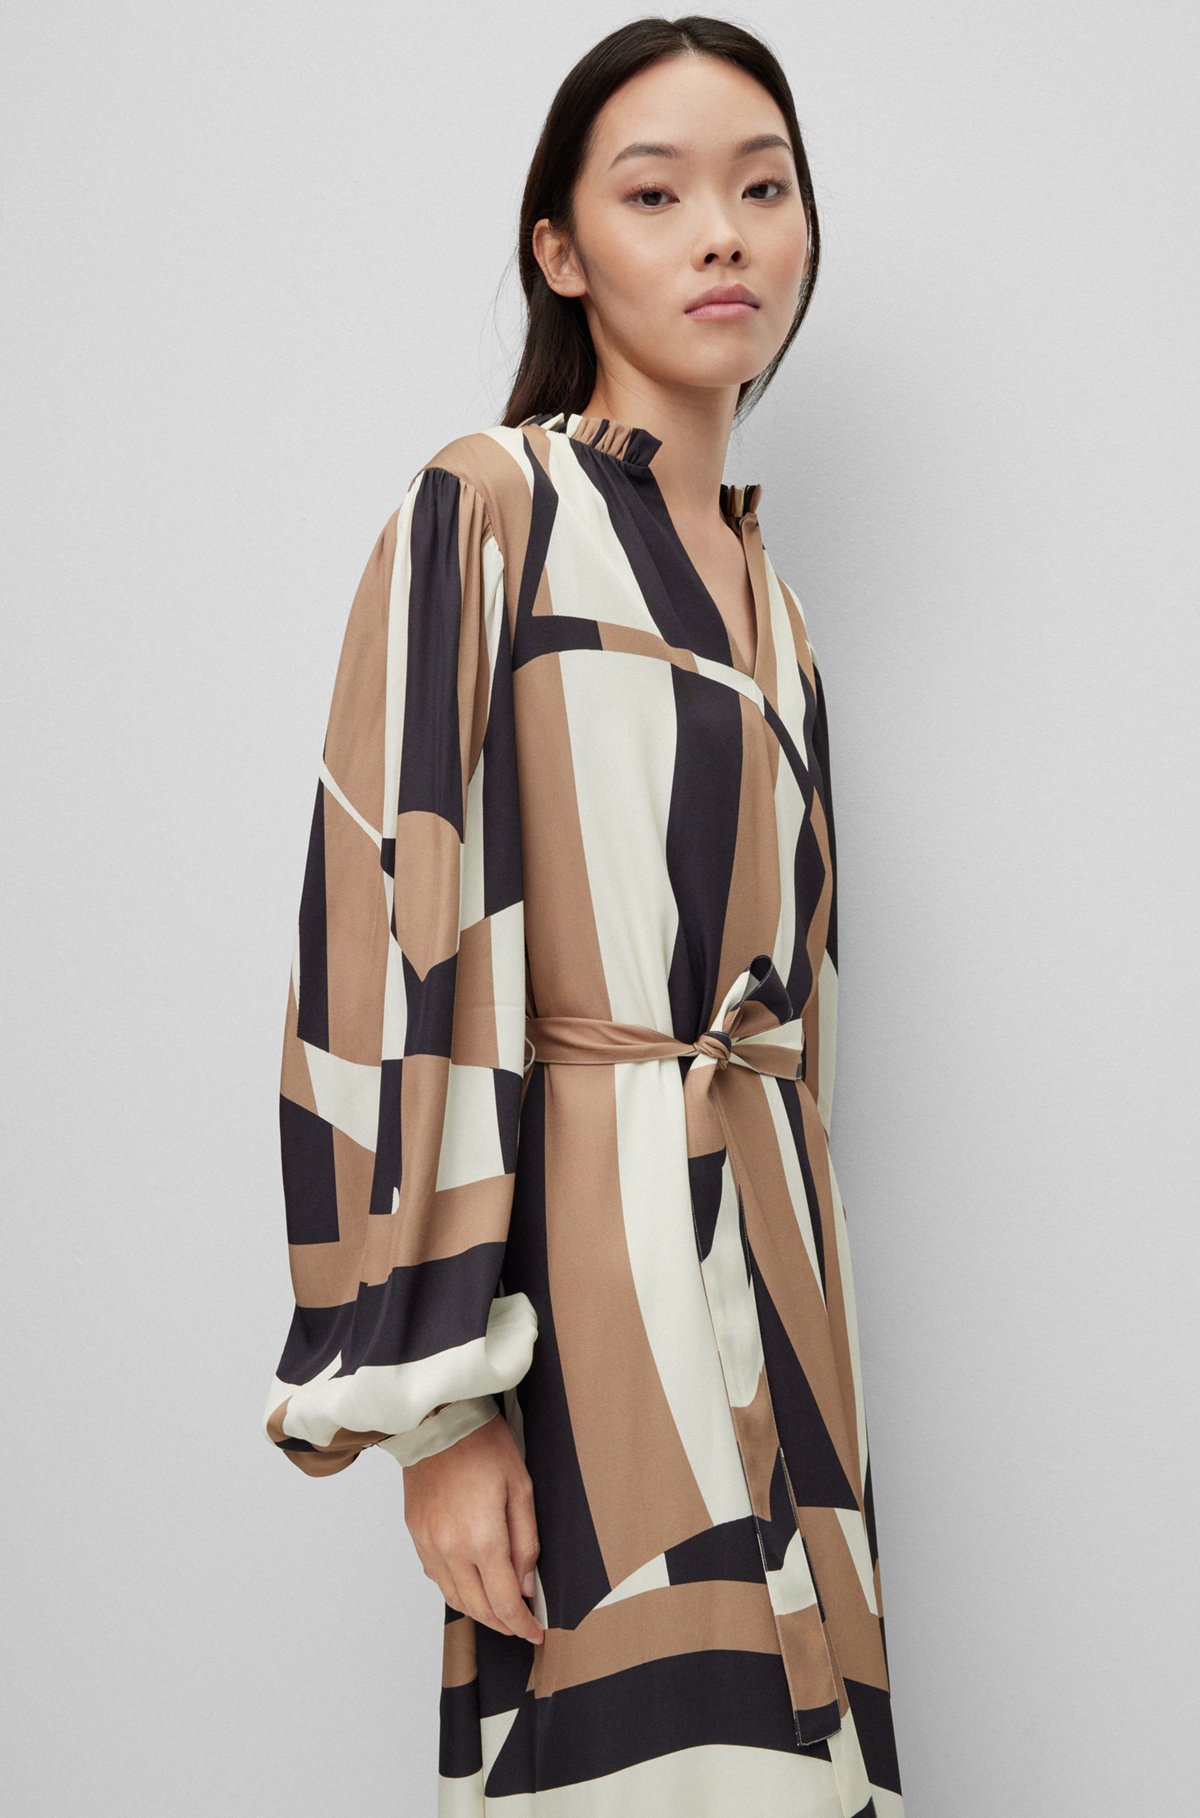 V-neck dress with signature-stripe print, Patterned